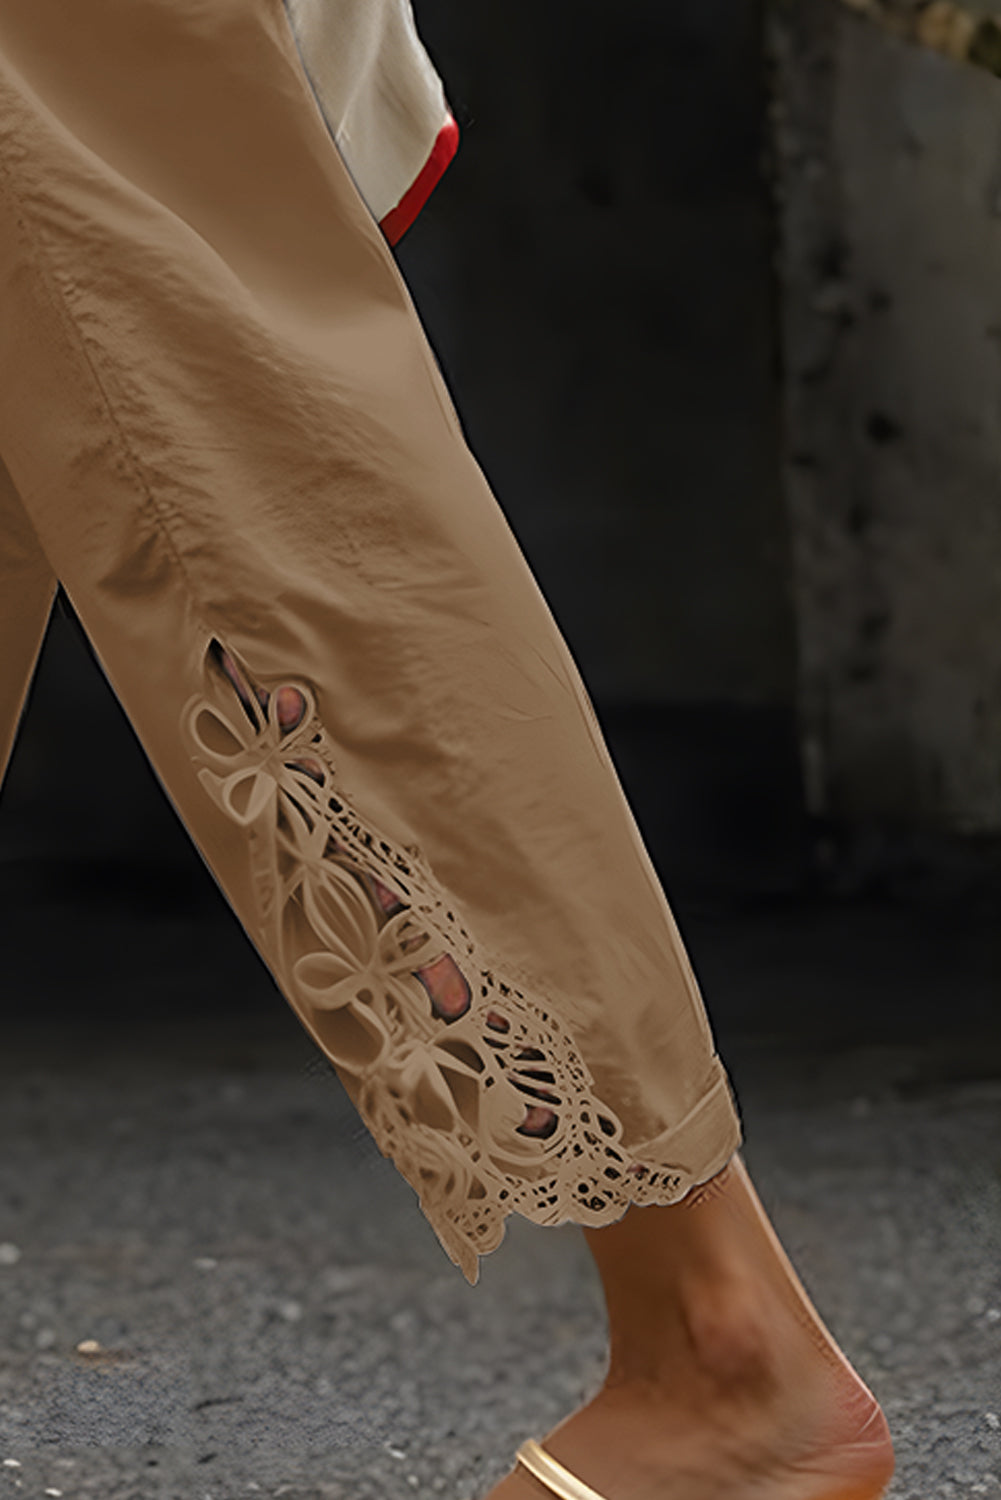 Khaki Lace Splicing Drawstring Casual Cotton Pants